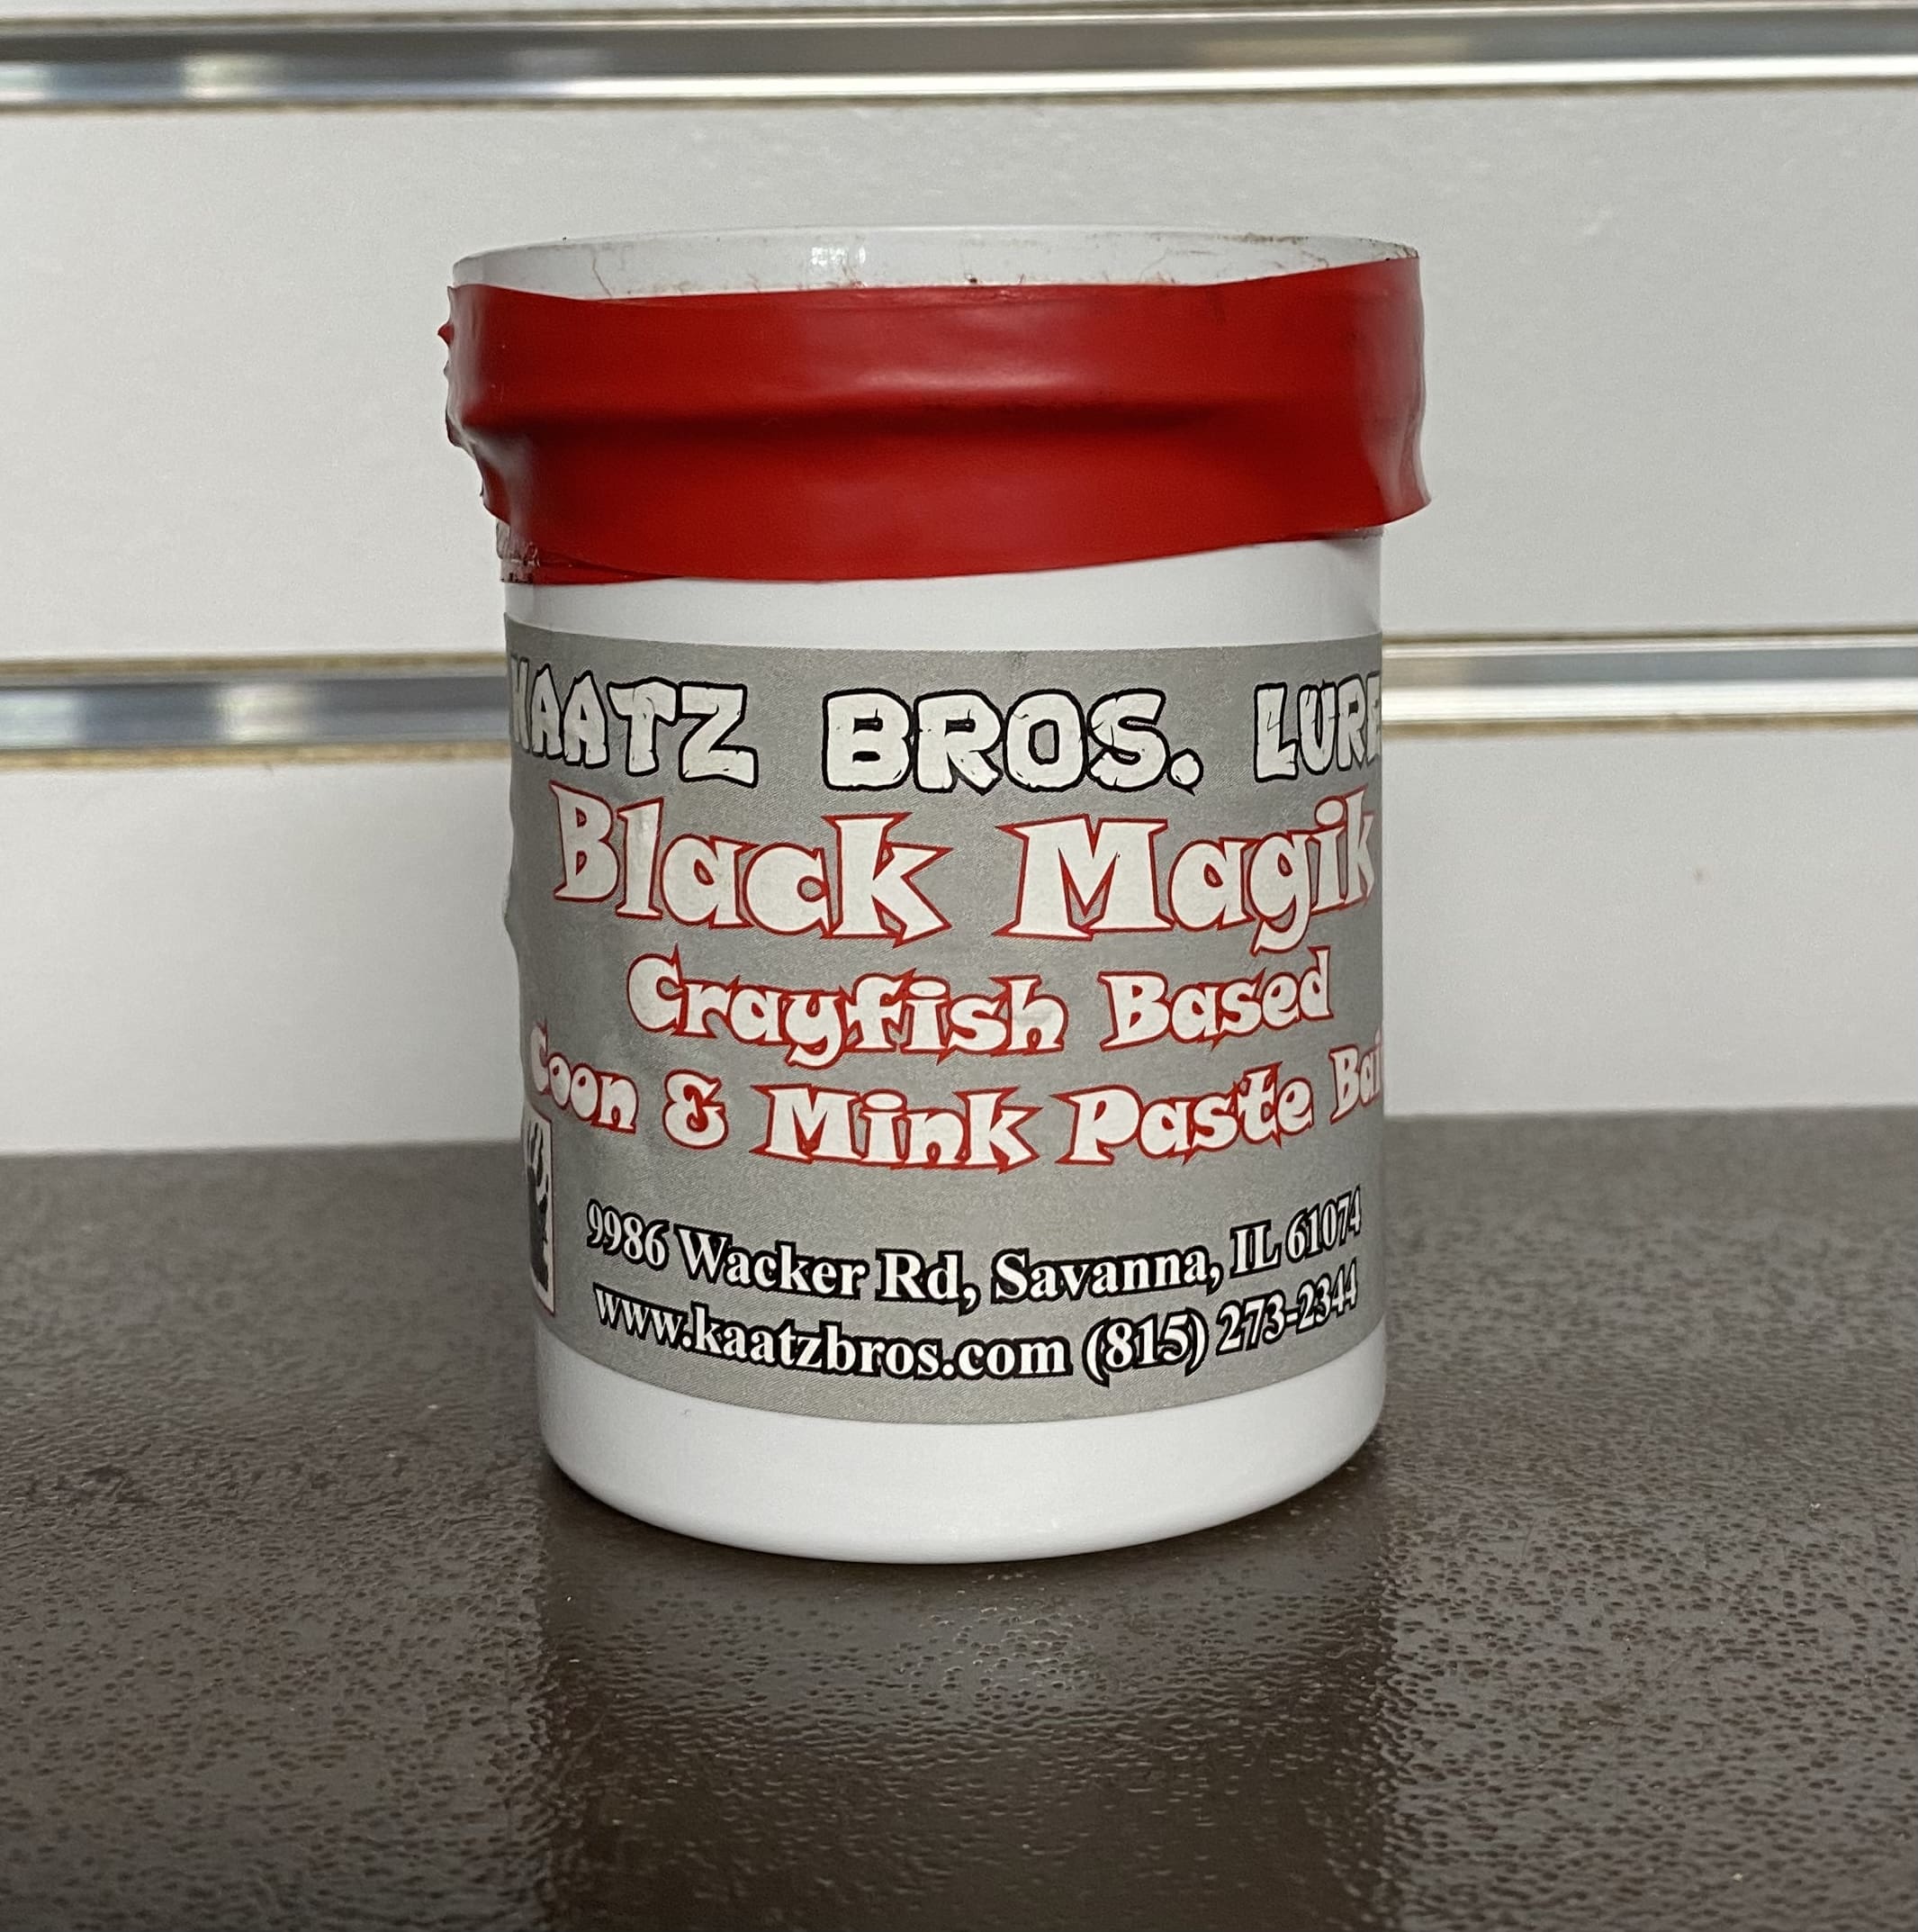 Kaatz Brothers' Black Magik Coon & Mink Paste Bait